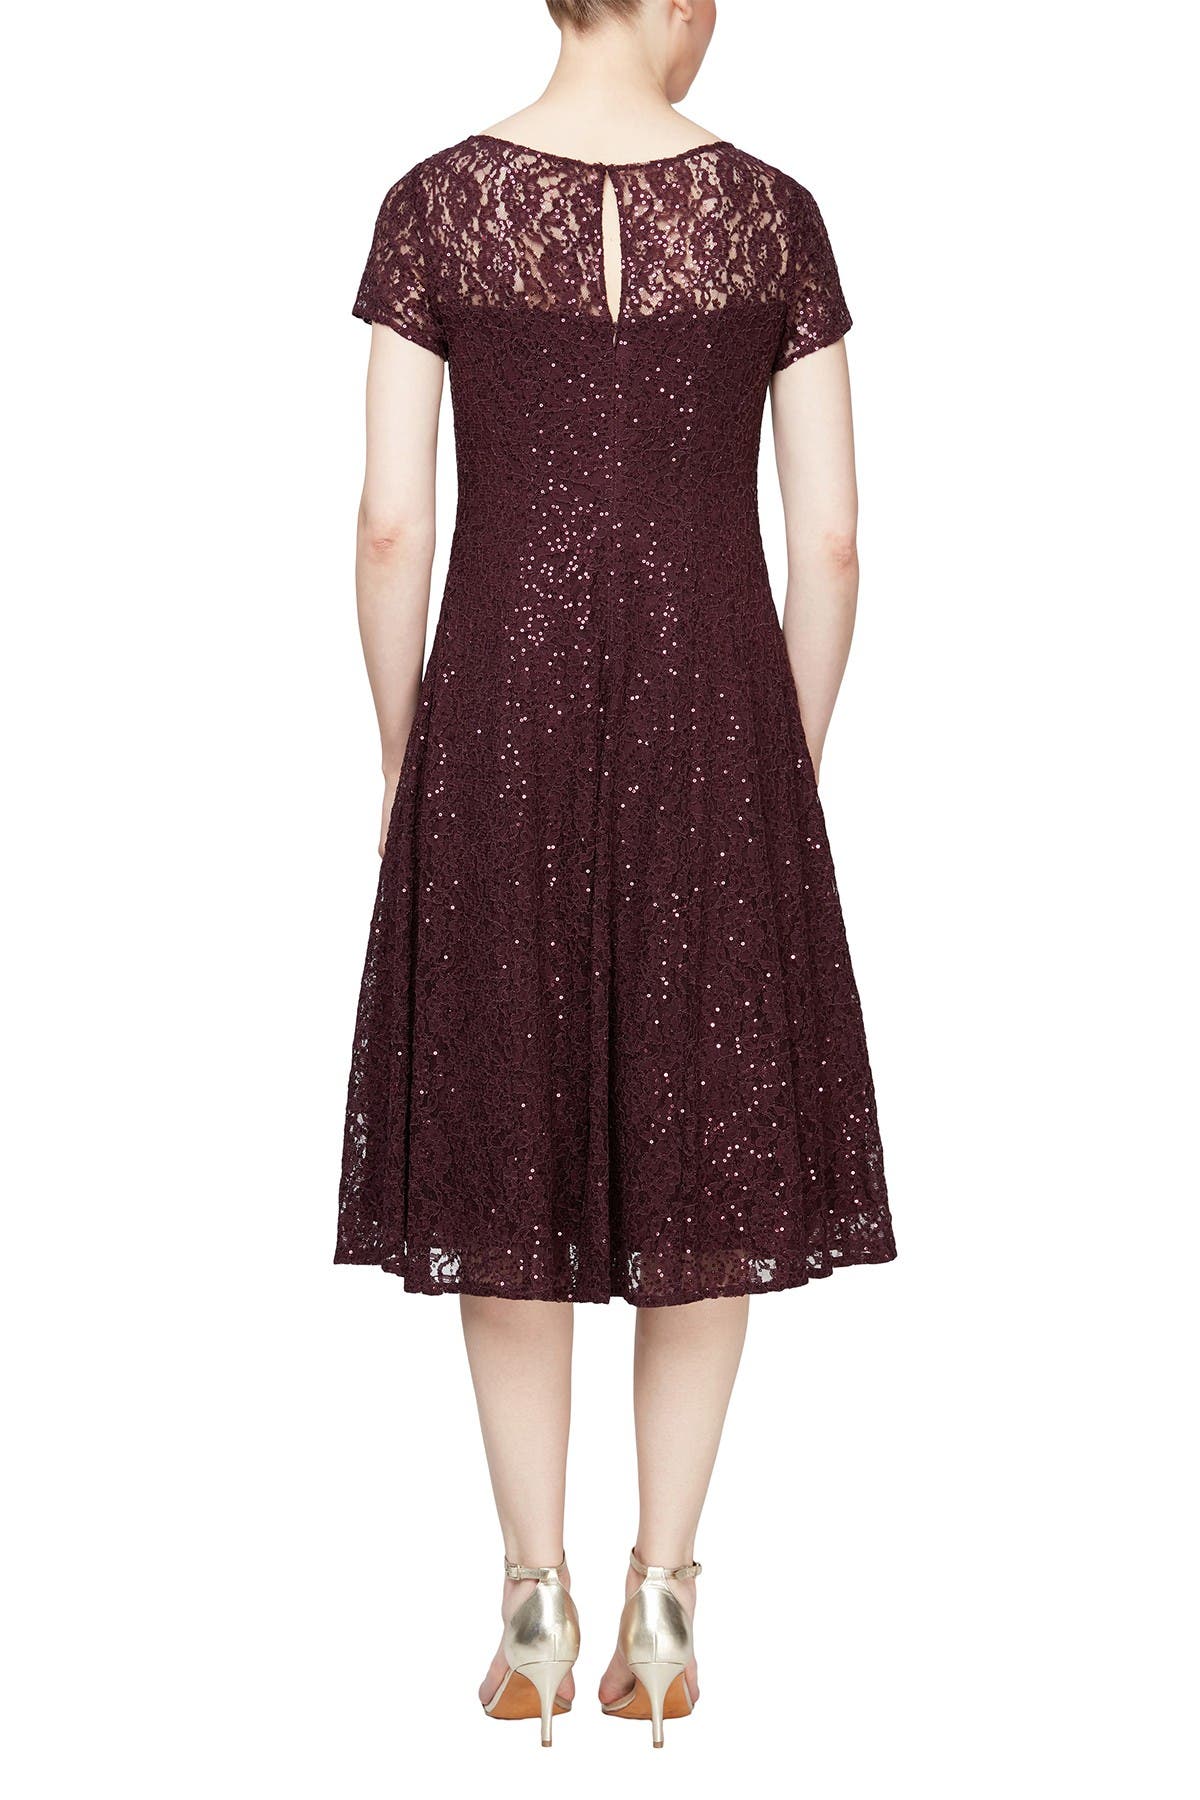 Sl Fashions Tea Length Sequin Lace Dress In Dark Purple7